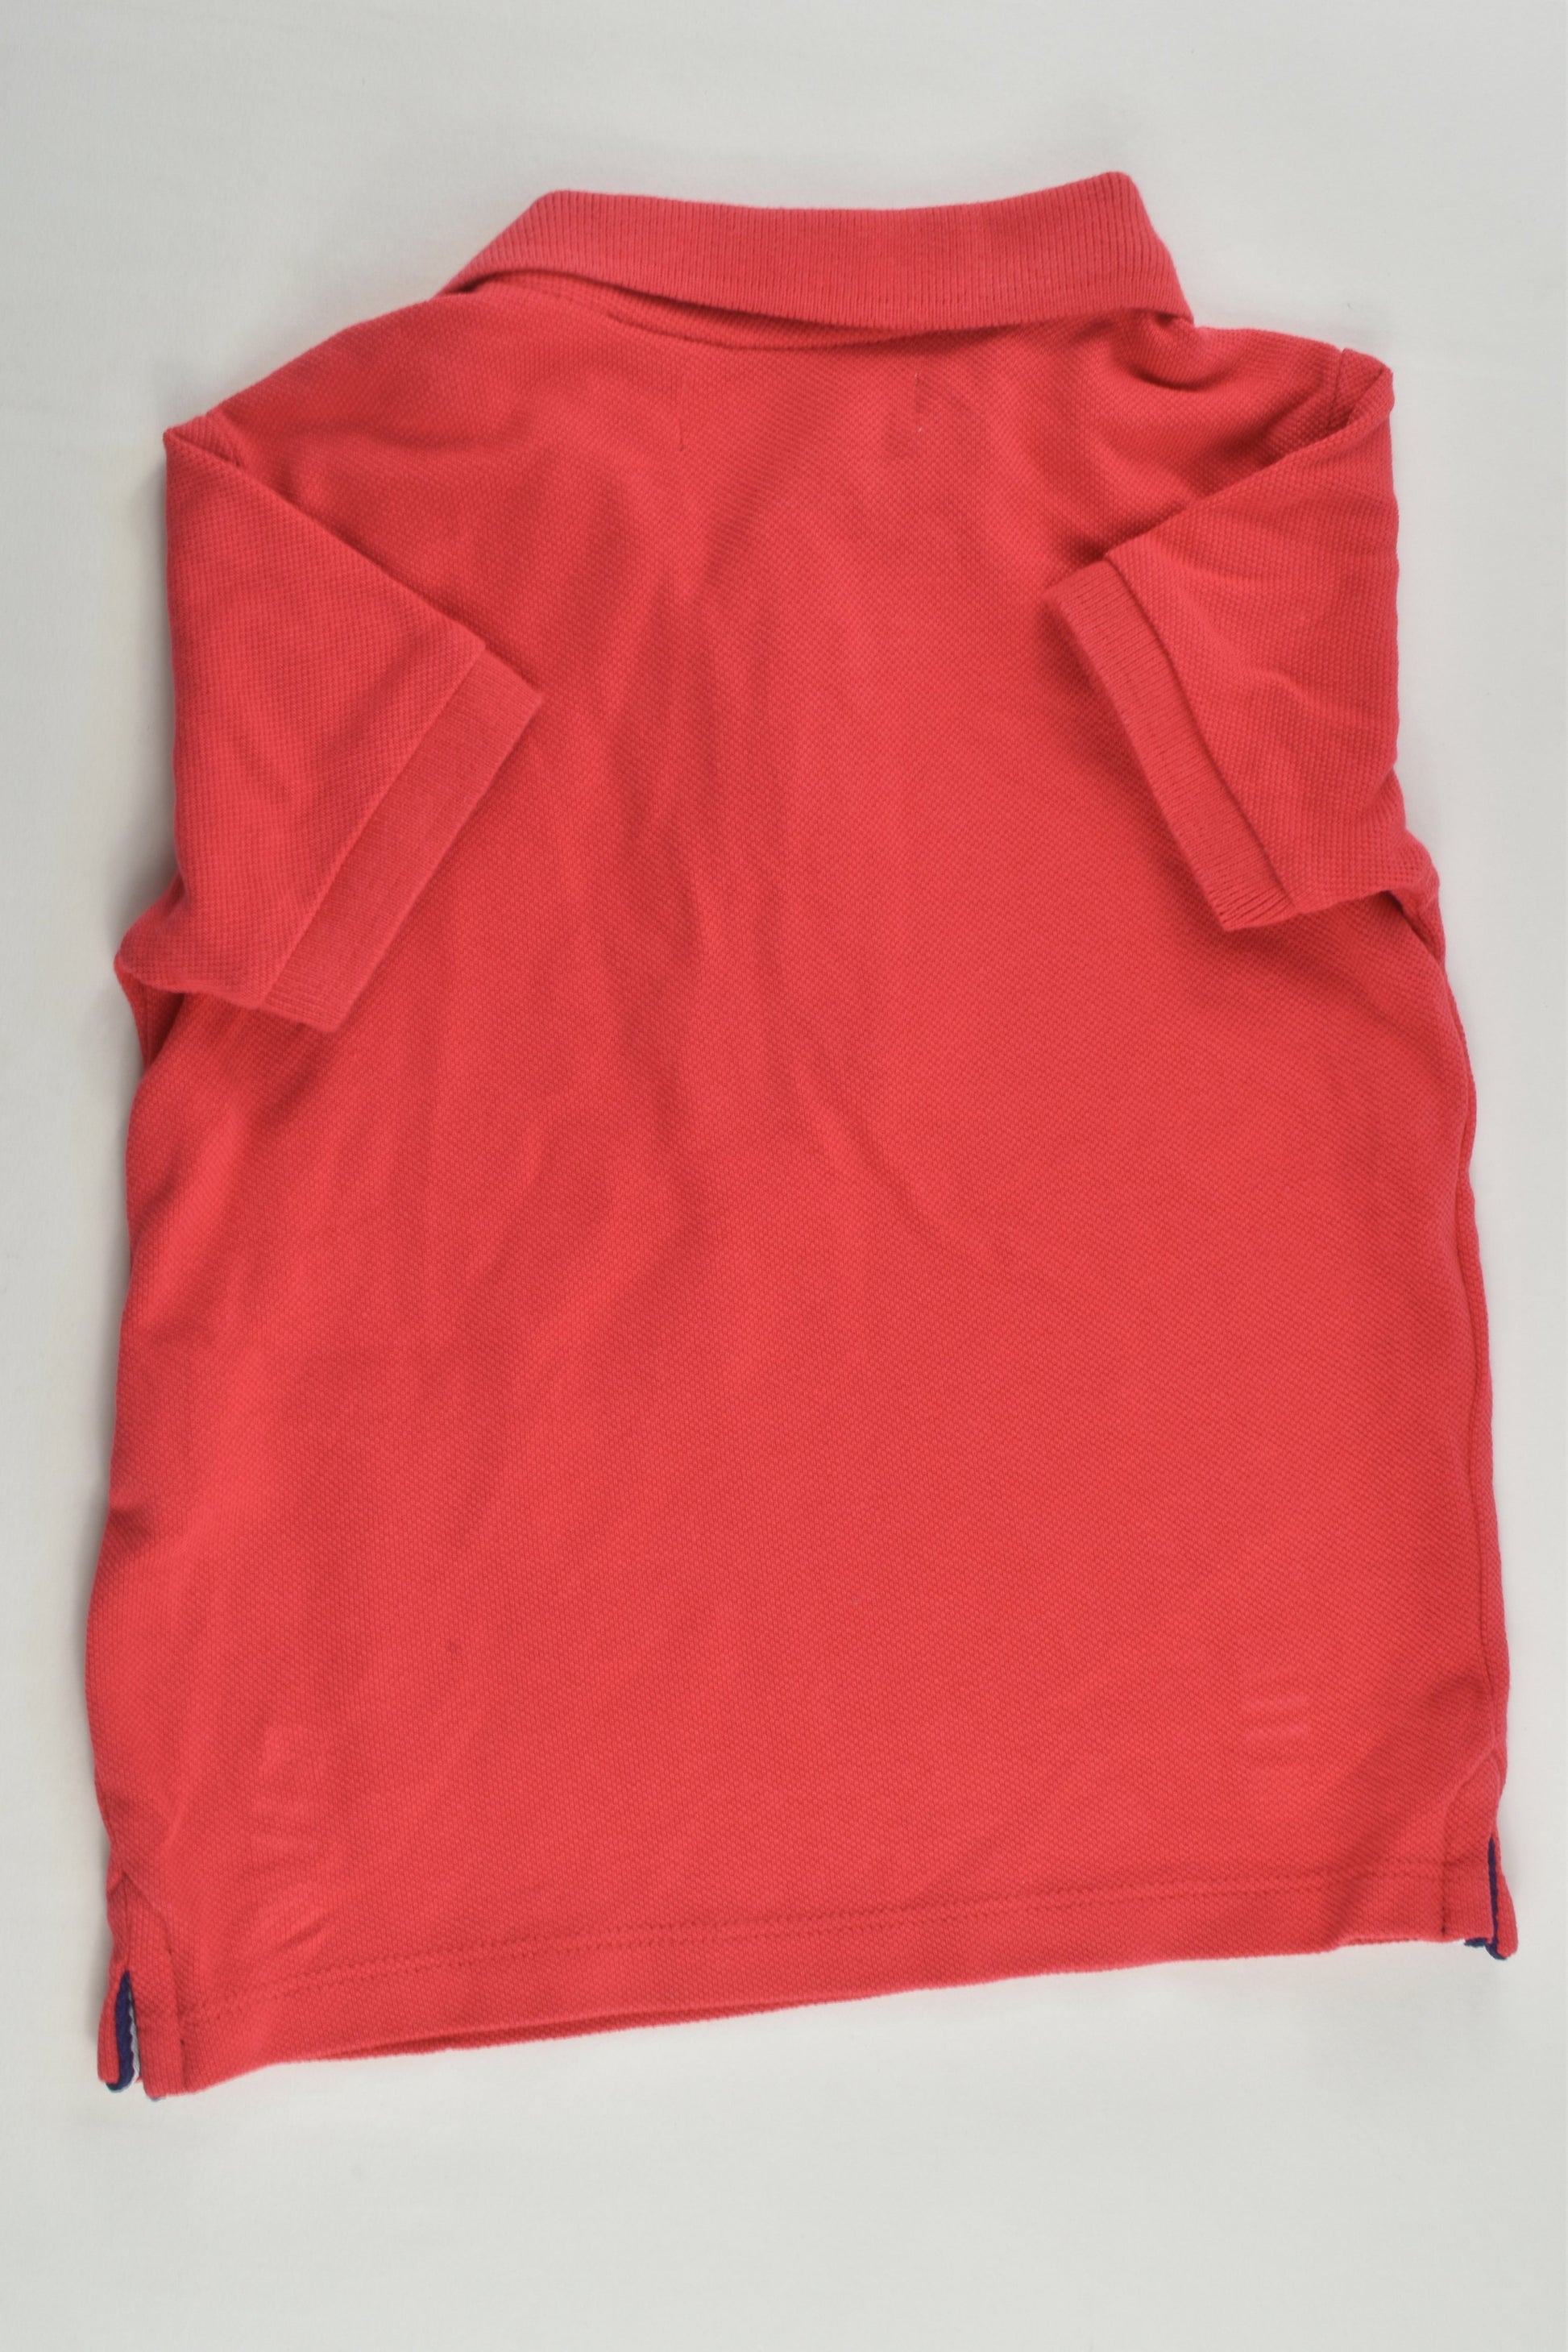 Zara Size 2 (92 cm) Red Polo Shirt